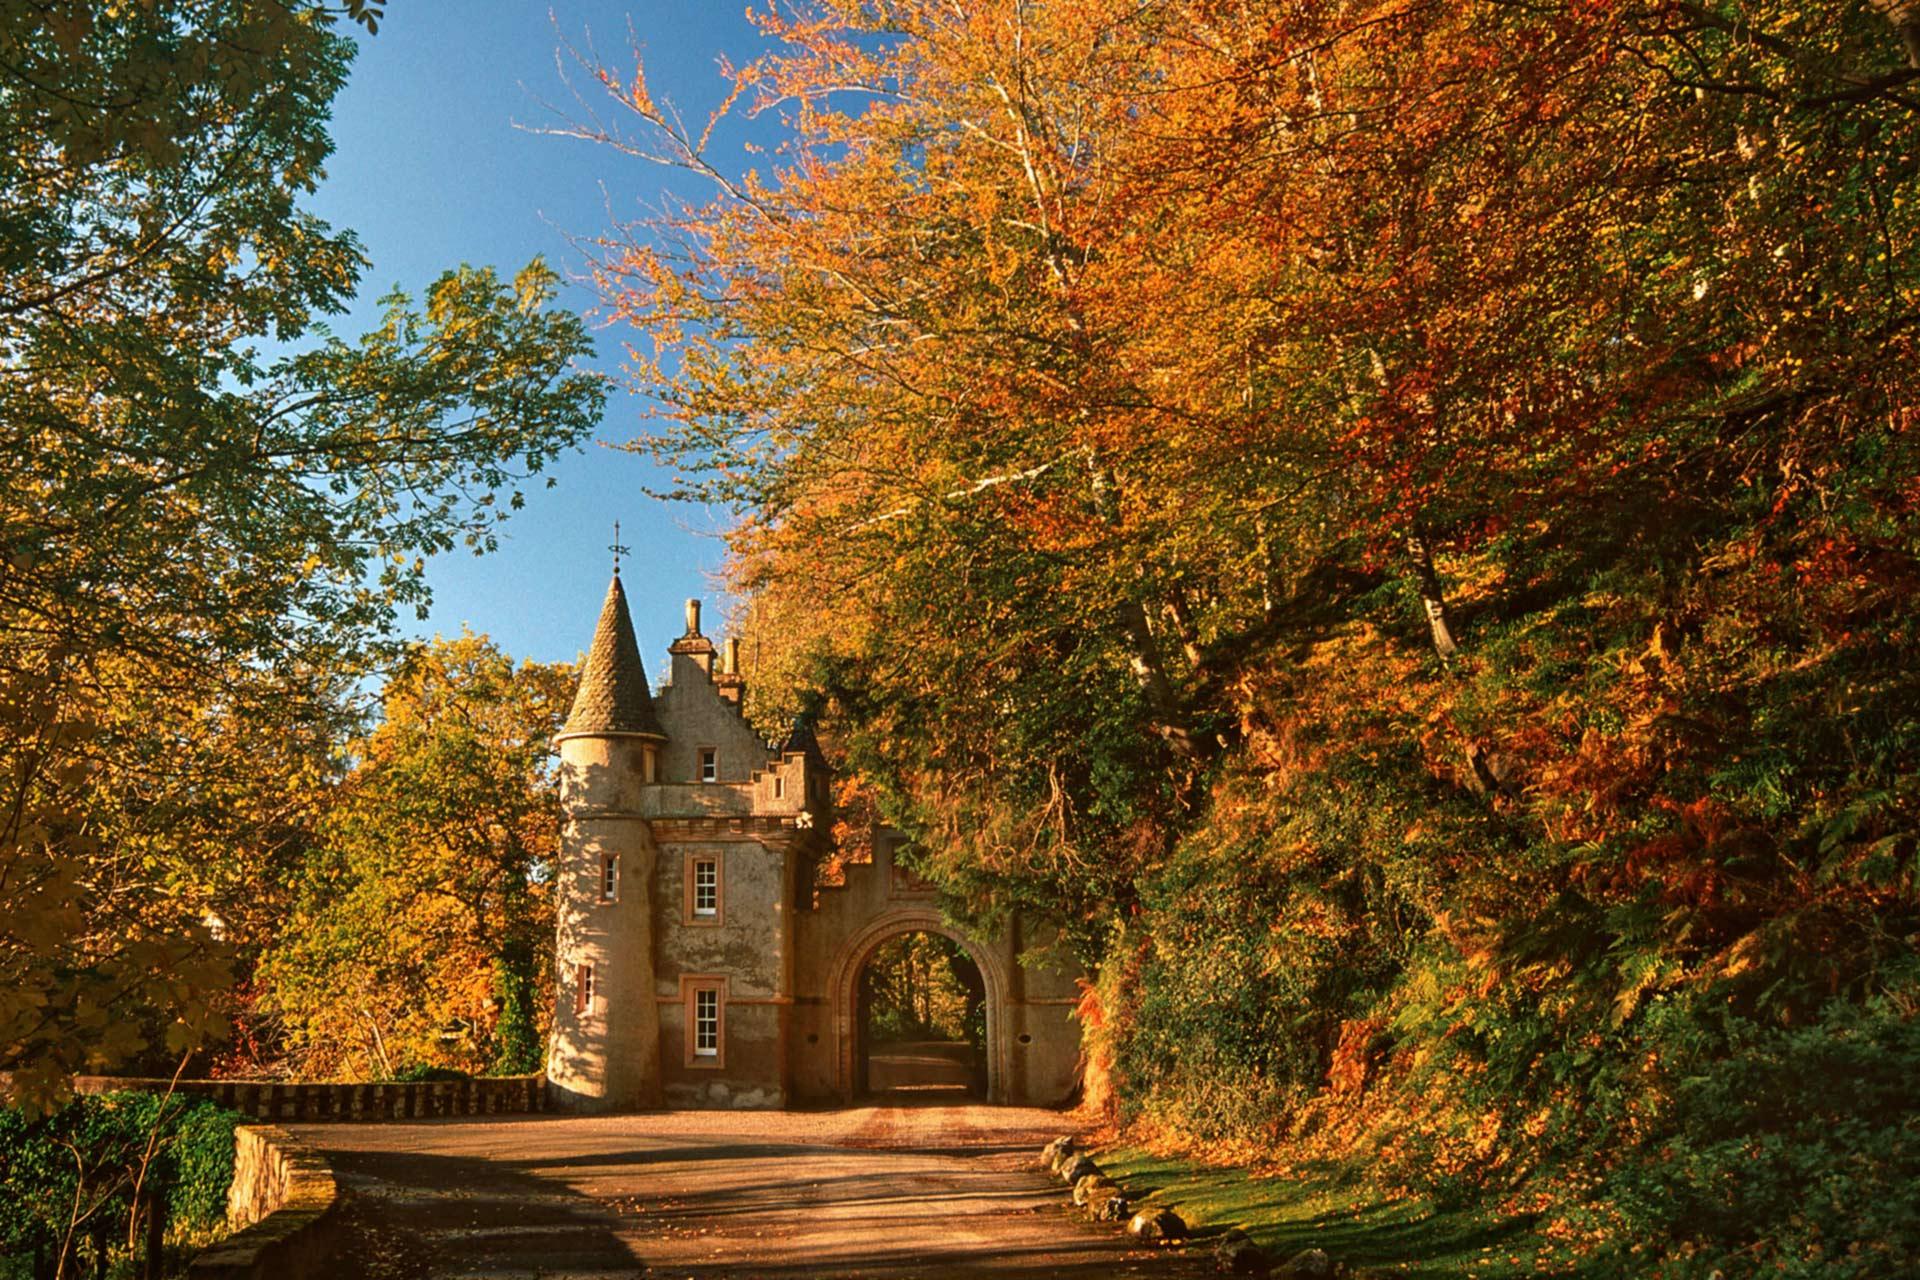 Leaf peeper's guide - autumn woodland walks | VisitScotland